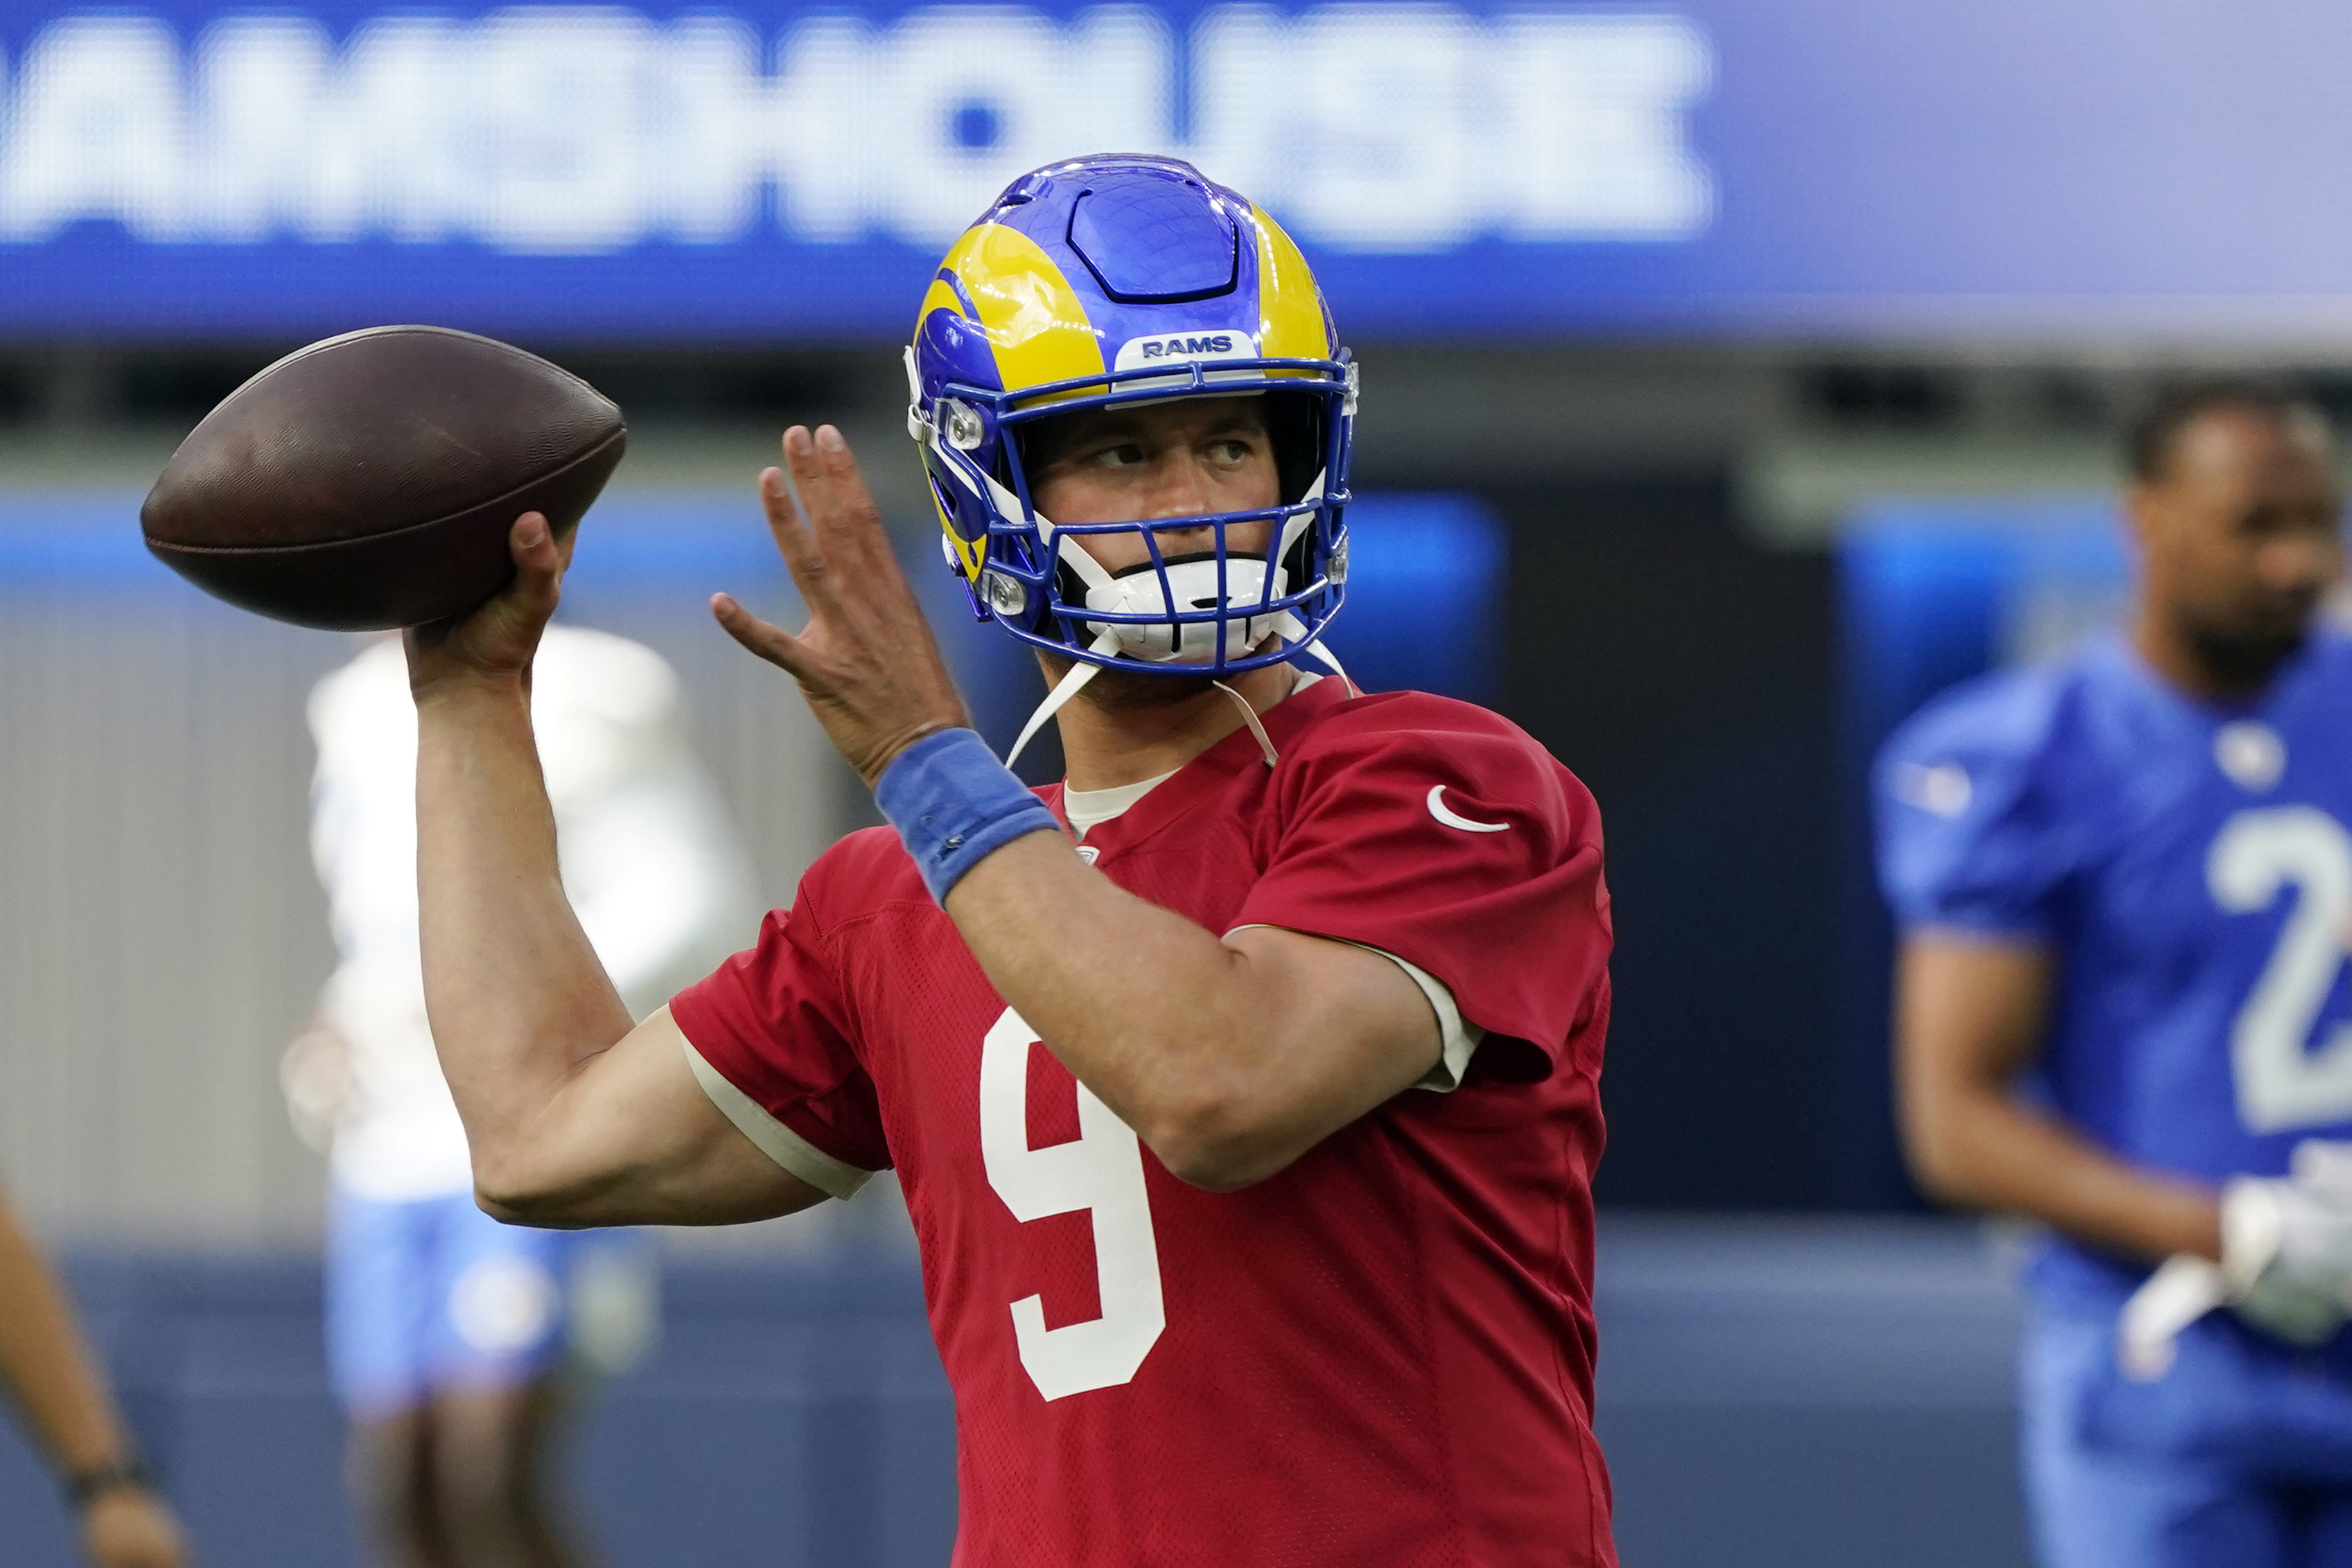 Sean McVay, Stafford talk Rams-49ers, Super Bowl: “He makes me